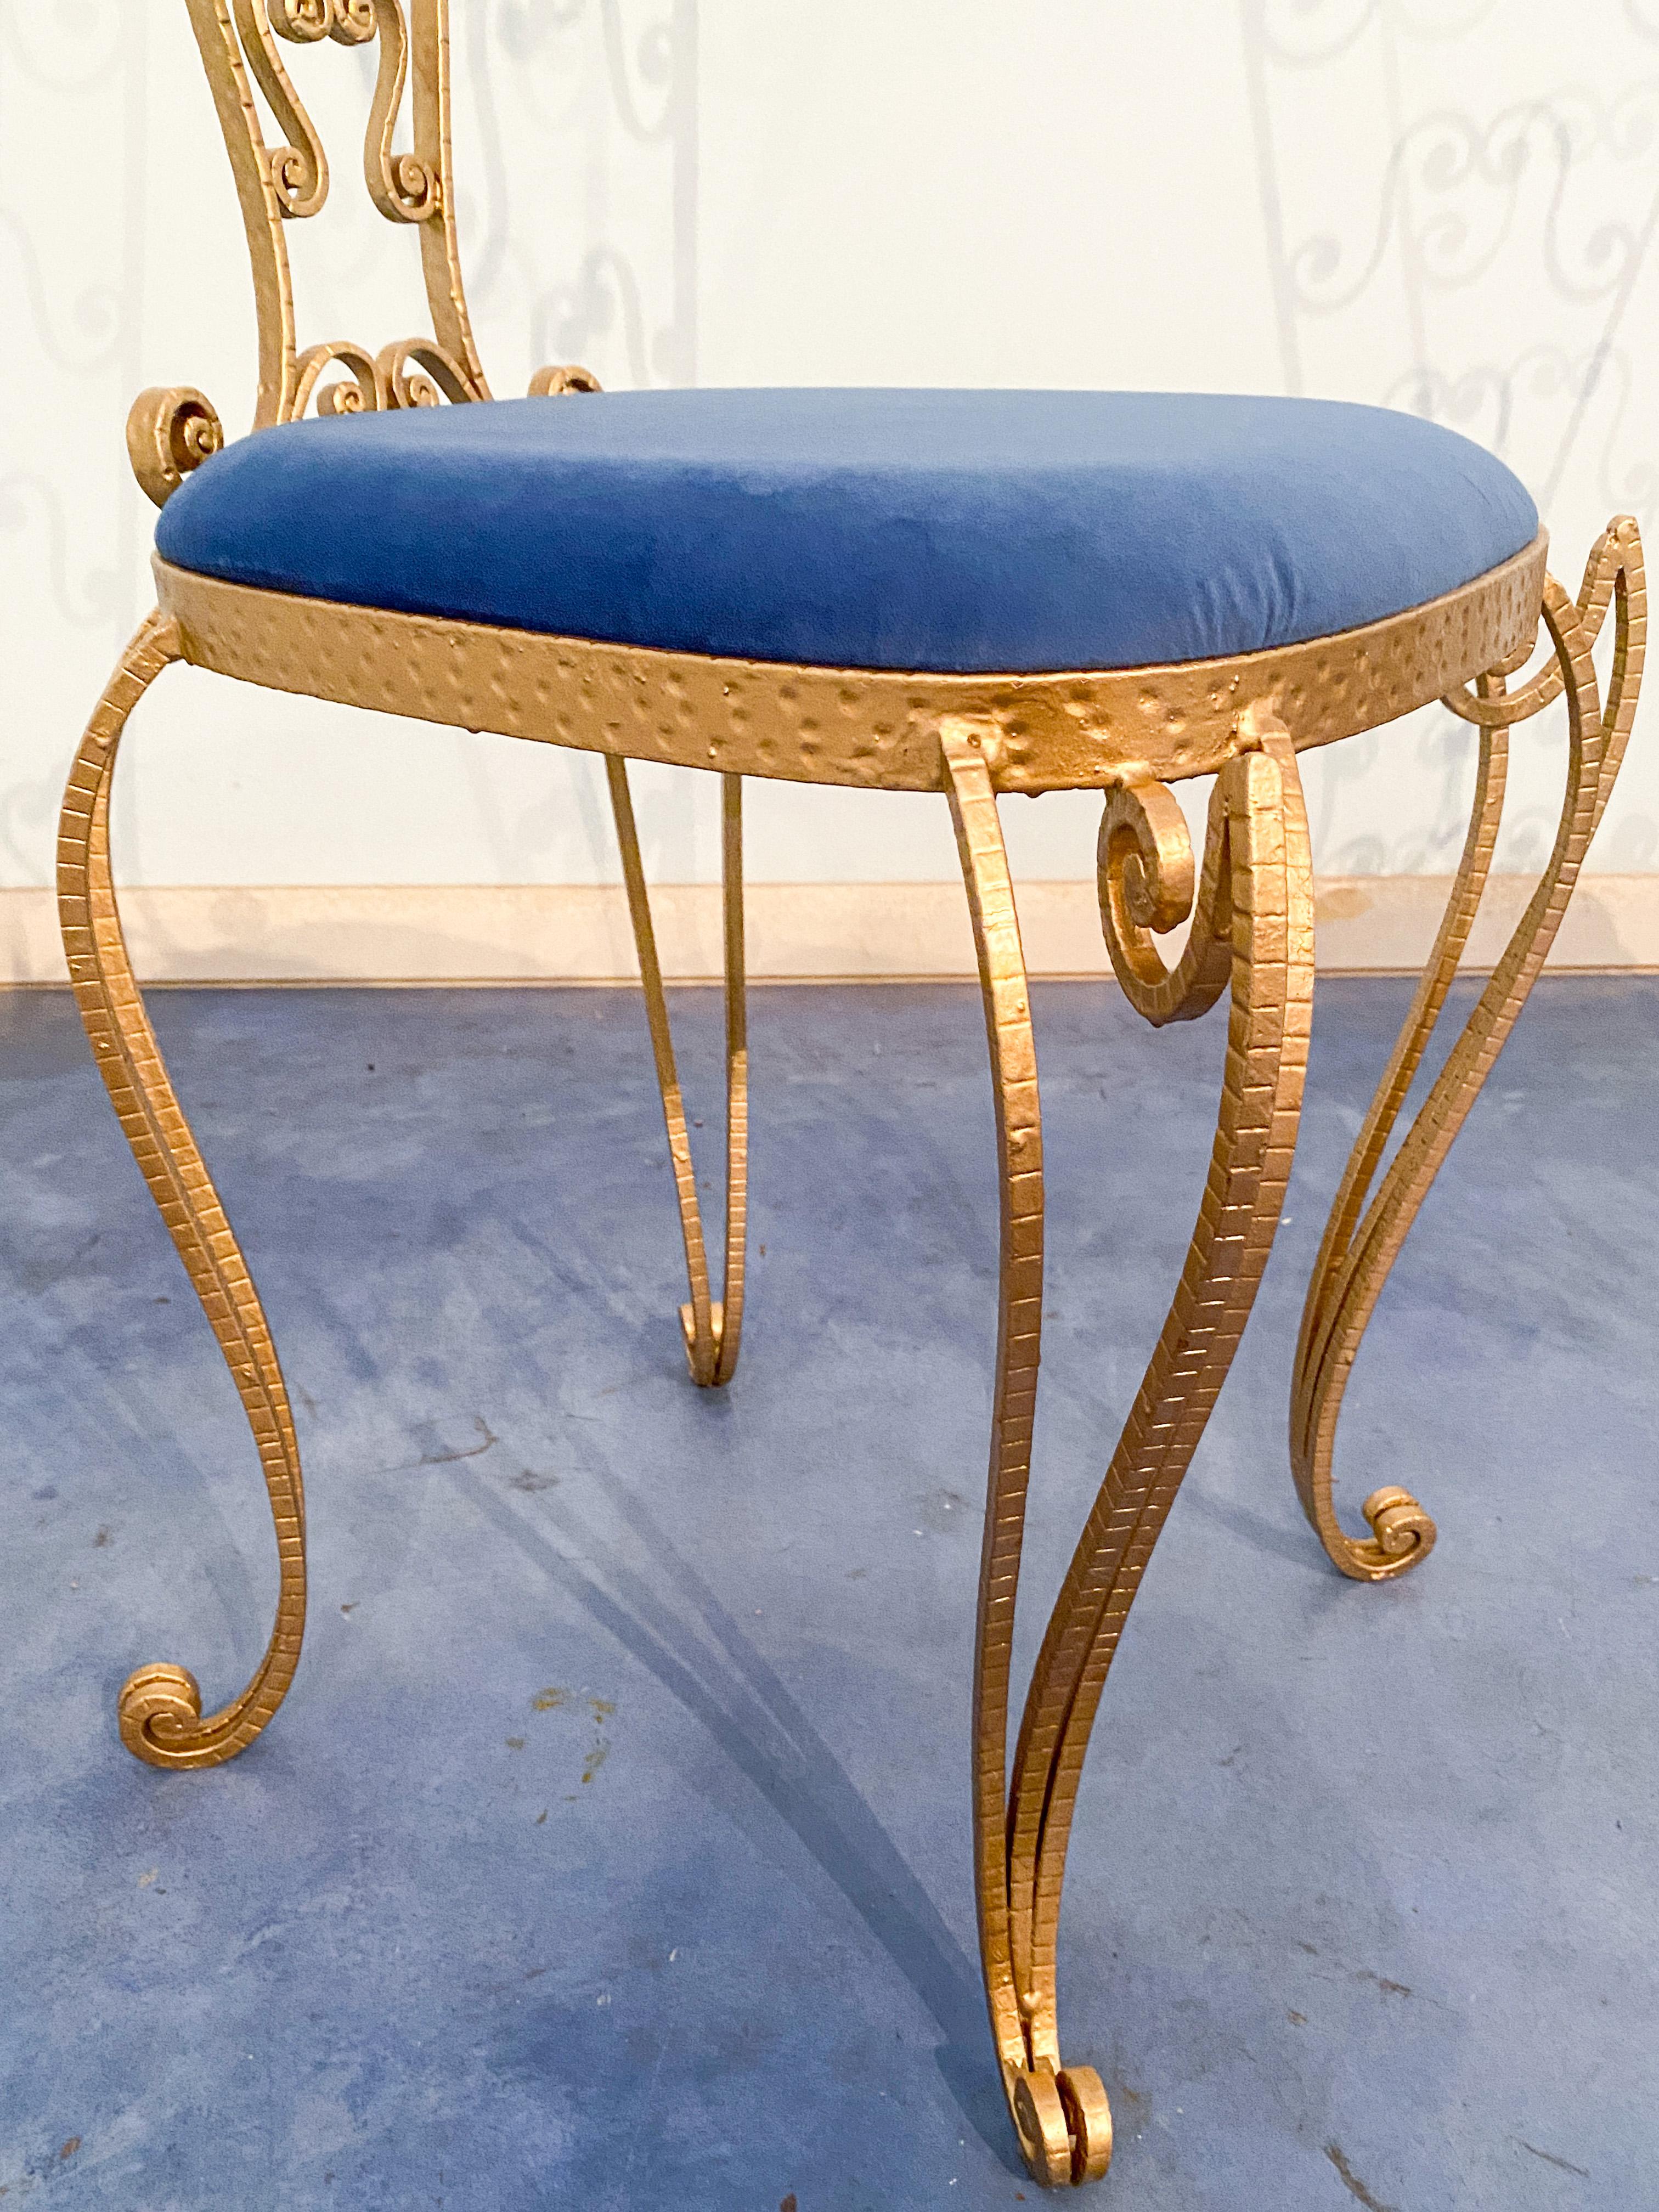 Pair of Italian Mid-Century Modern Luigi Colli Gold Iron Vanity Chairs, 1950s For Sale 3